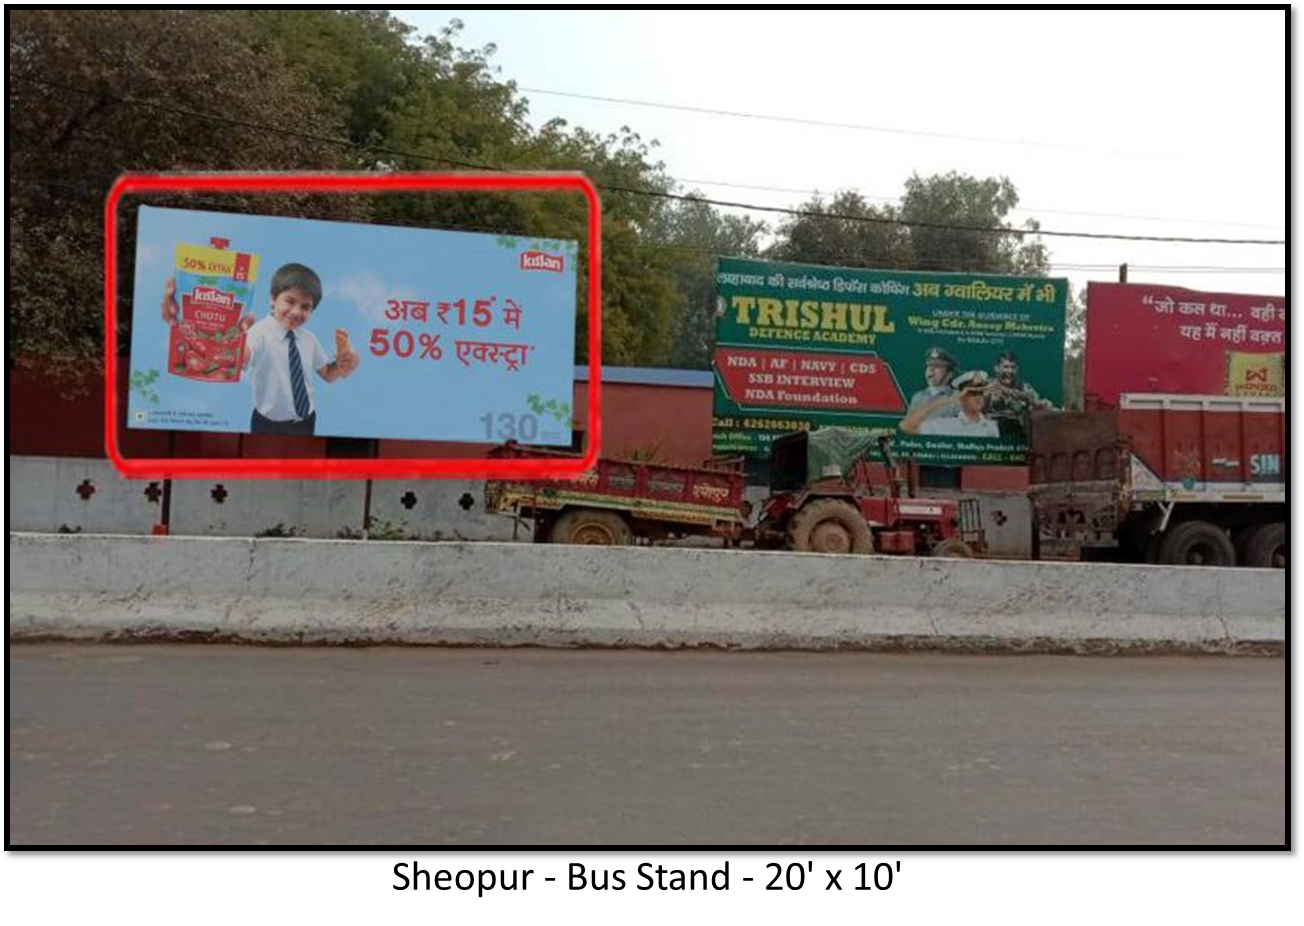 Billboard - Bus Station, Sheopur, Madhya Pradesh